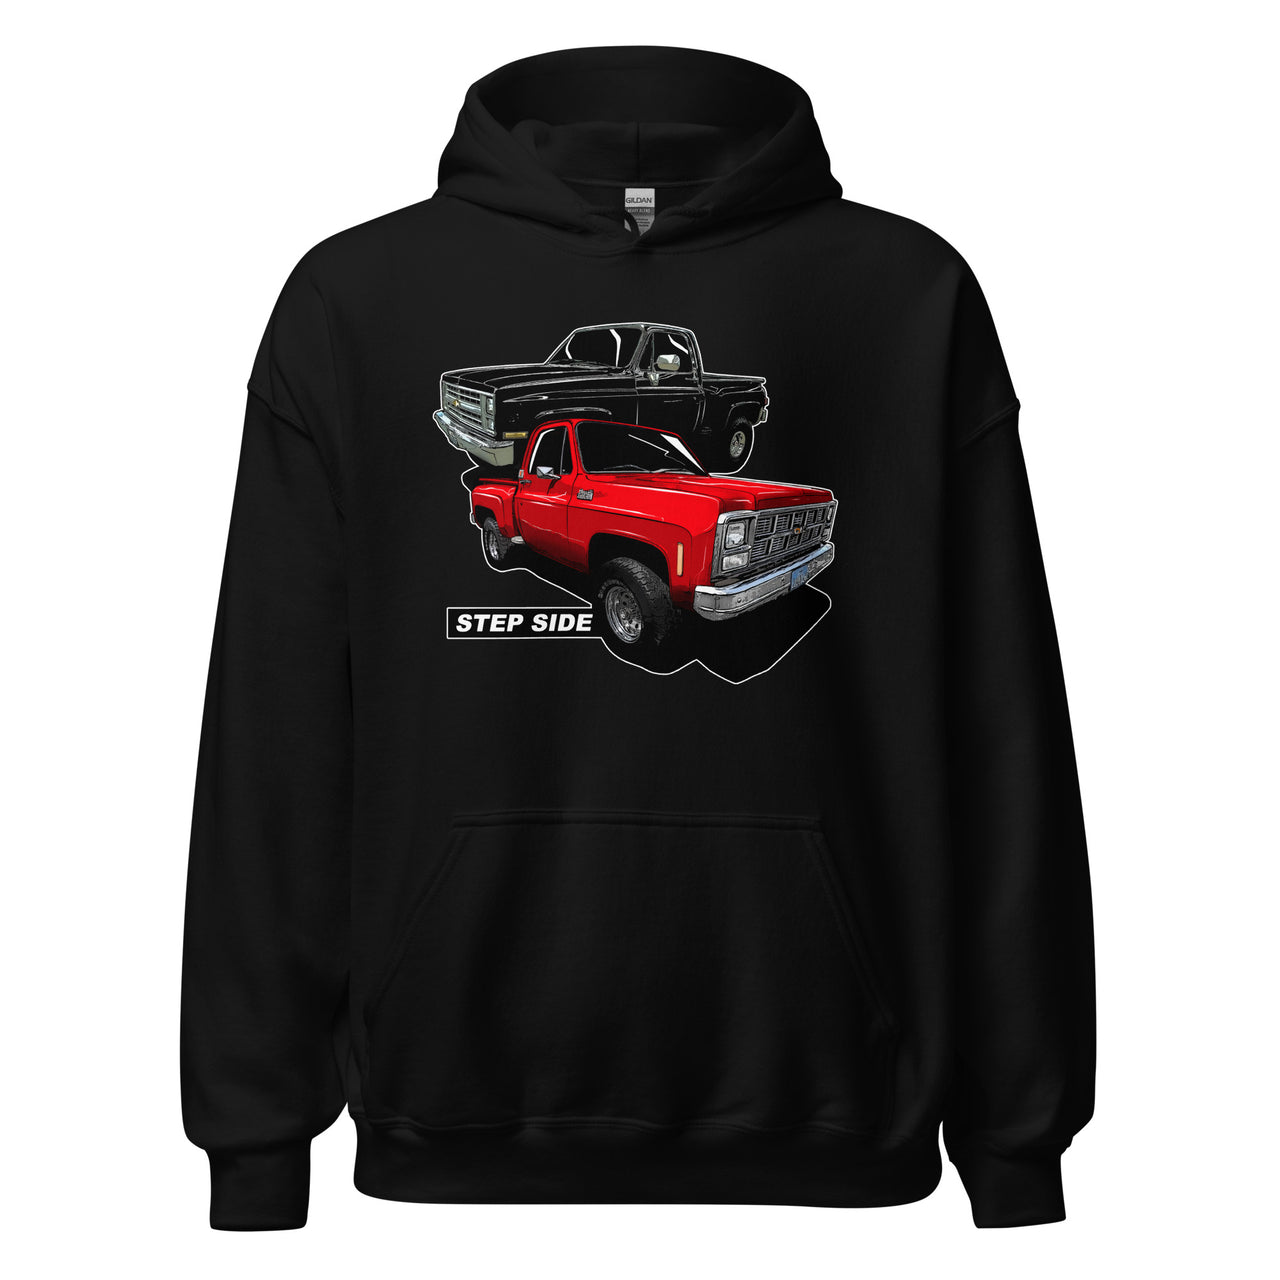 step side square body truck hoodie in black